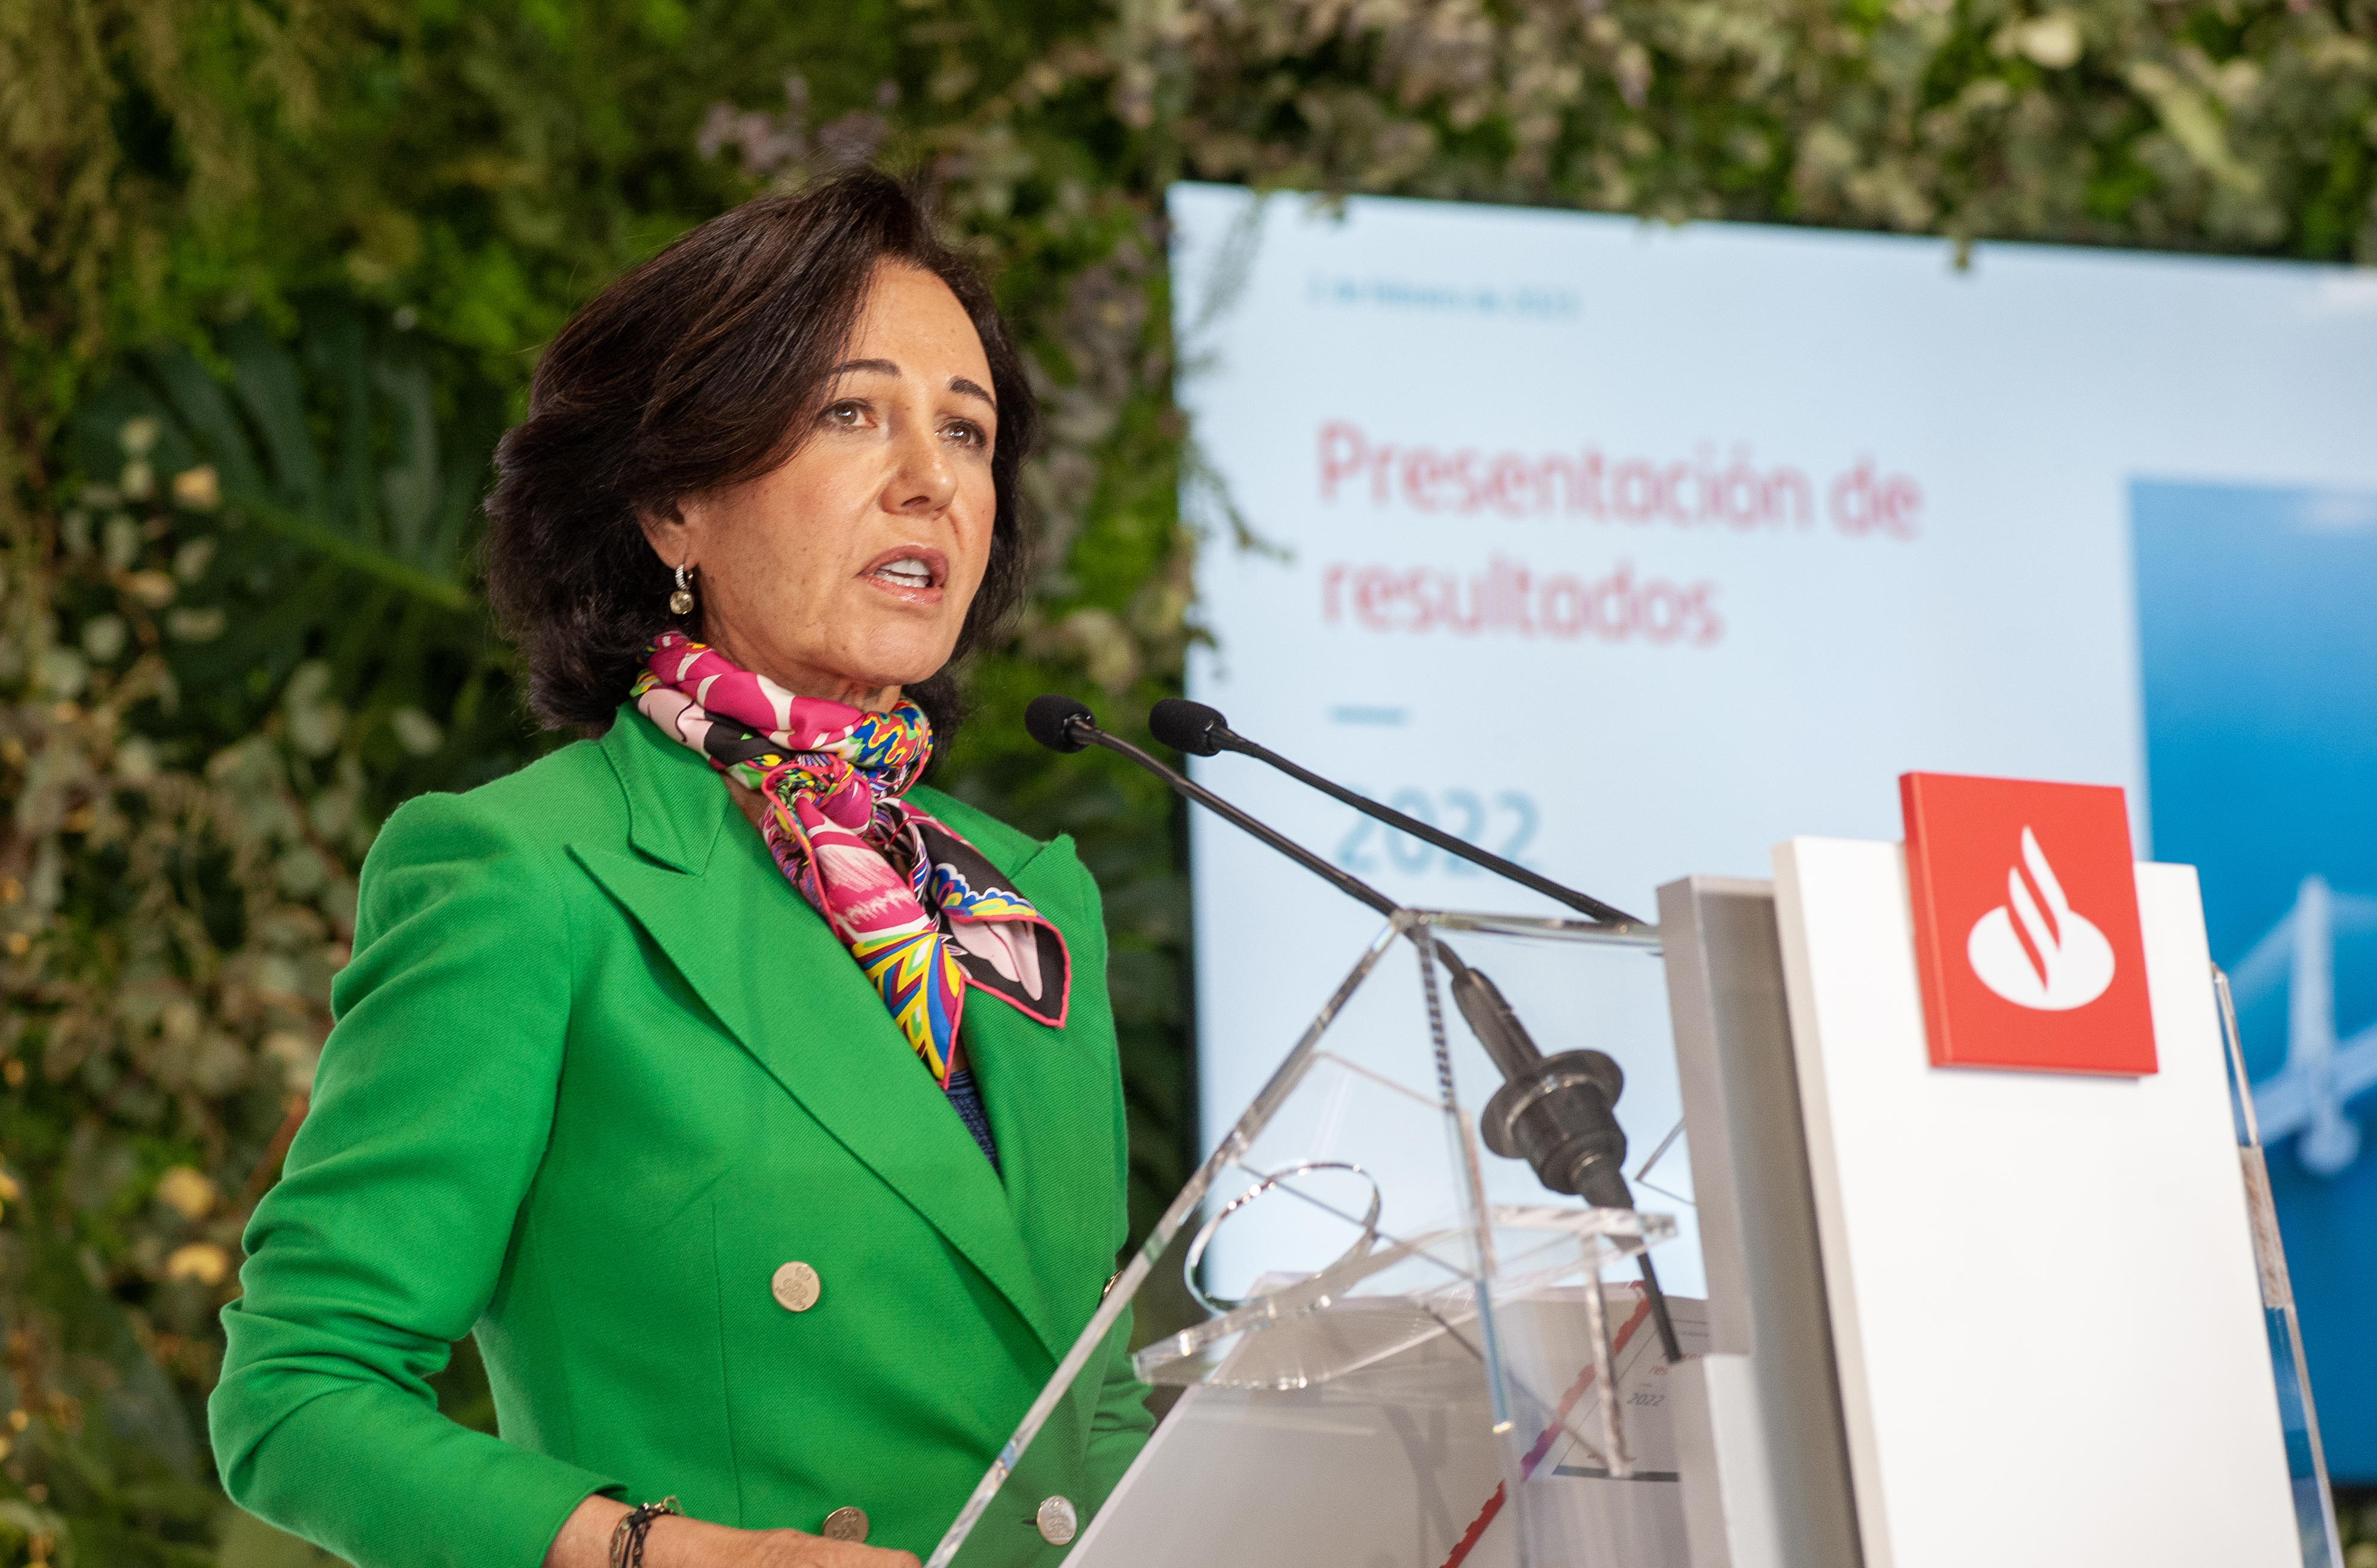 Ana Botín (presidenta de Banco Santander)